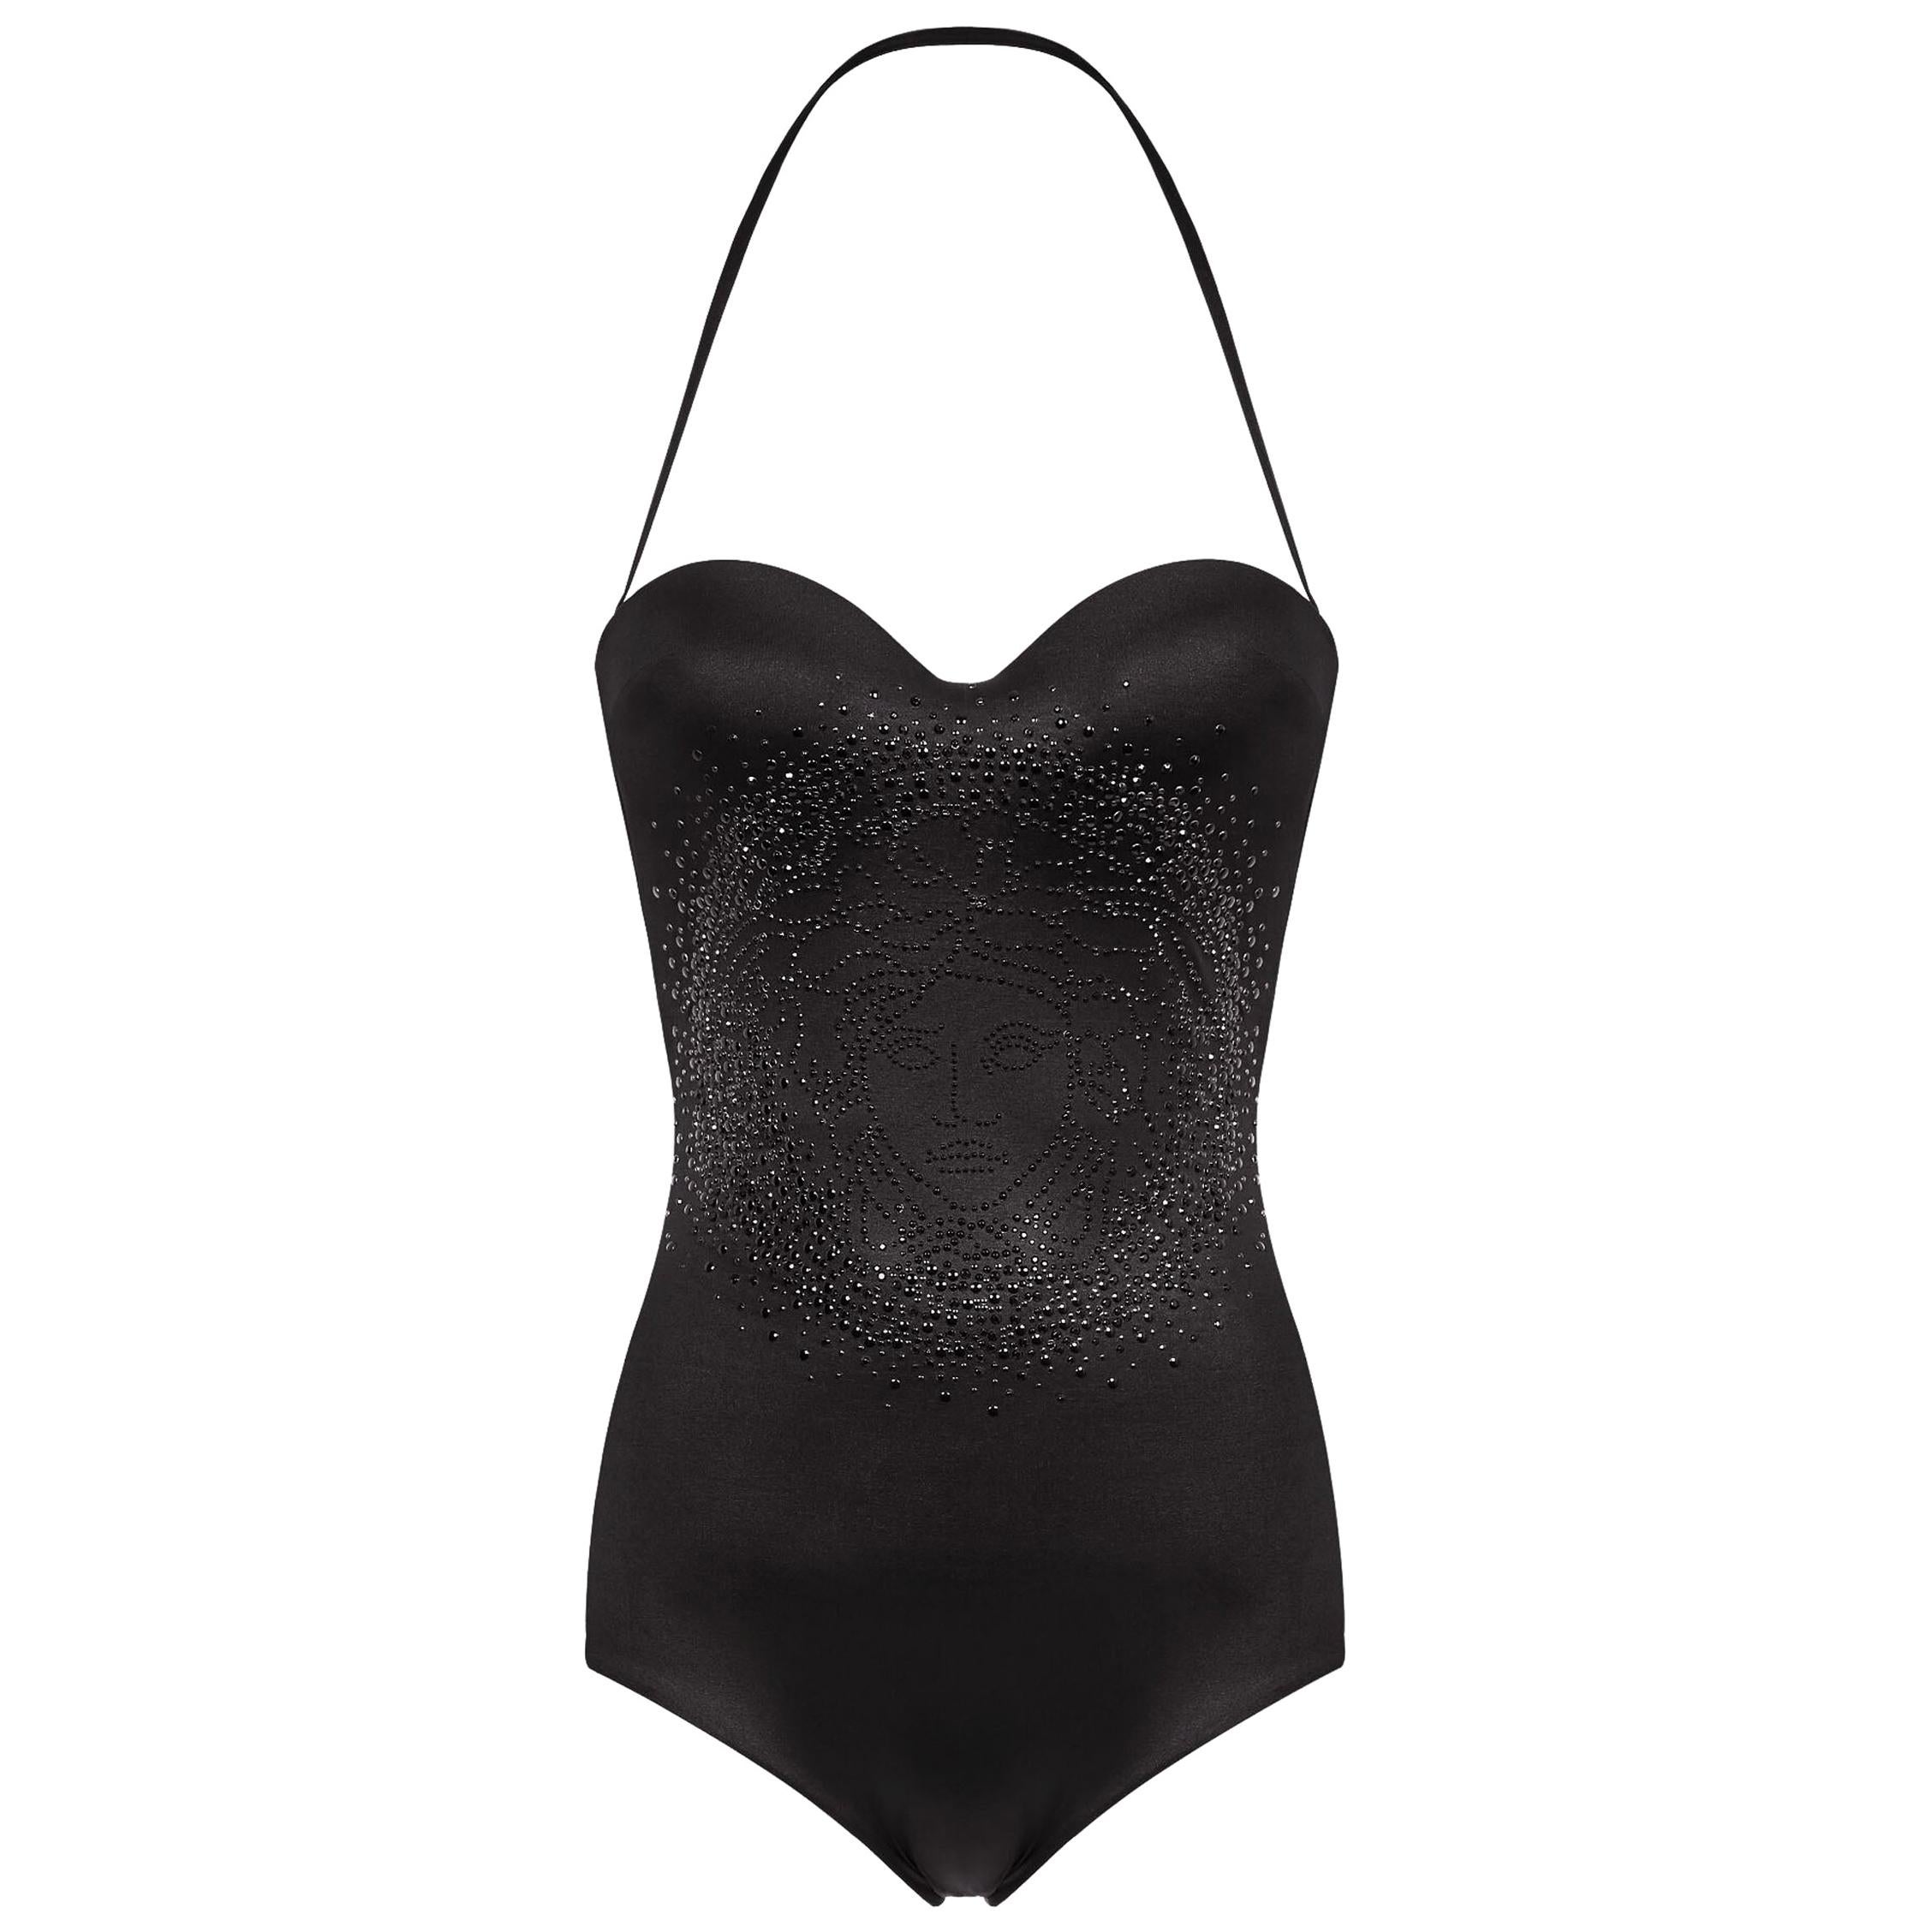 New Versace Black Jersey Embellished Medusa Swimsuit 1, 2, 4